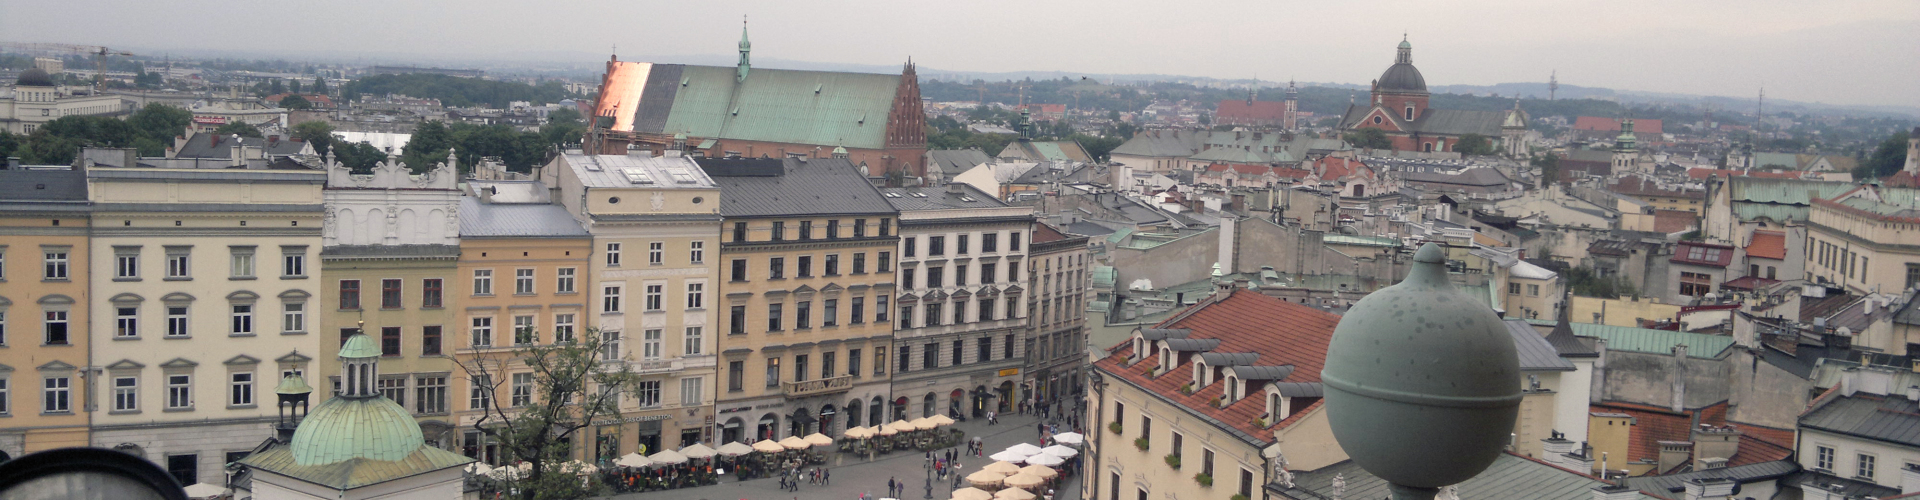 Rooftops of Kraków